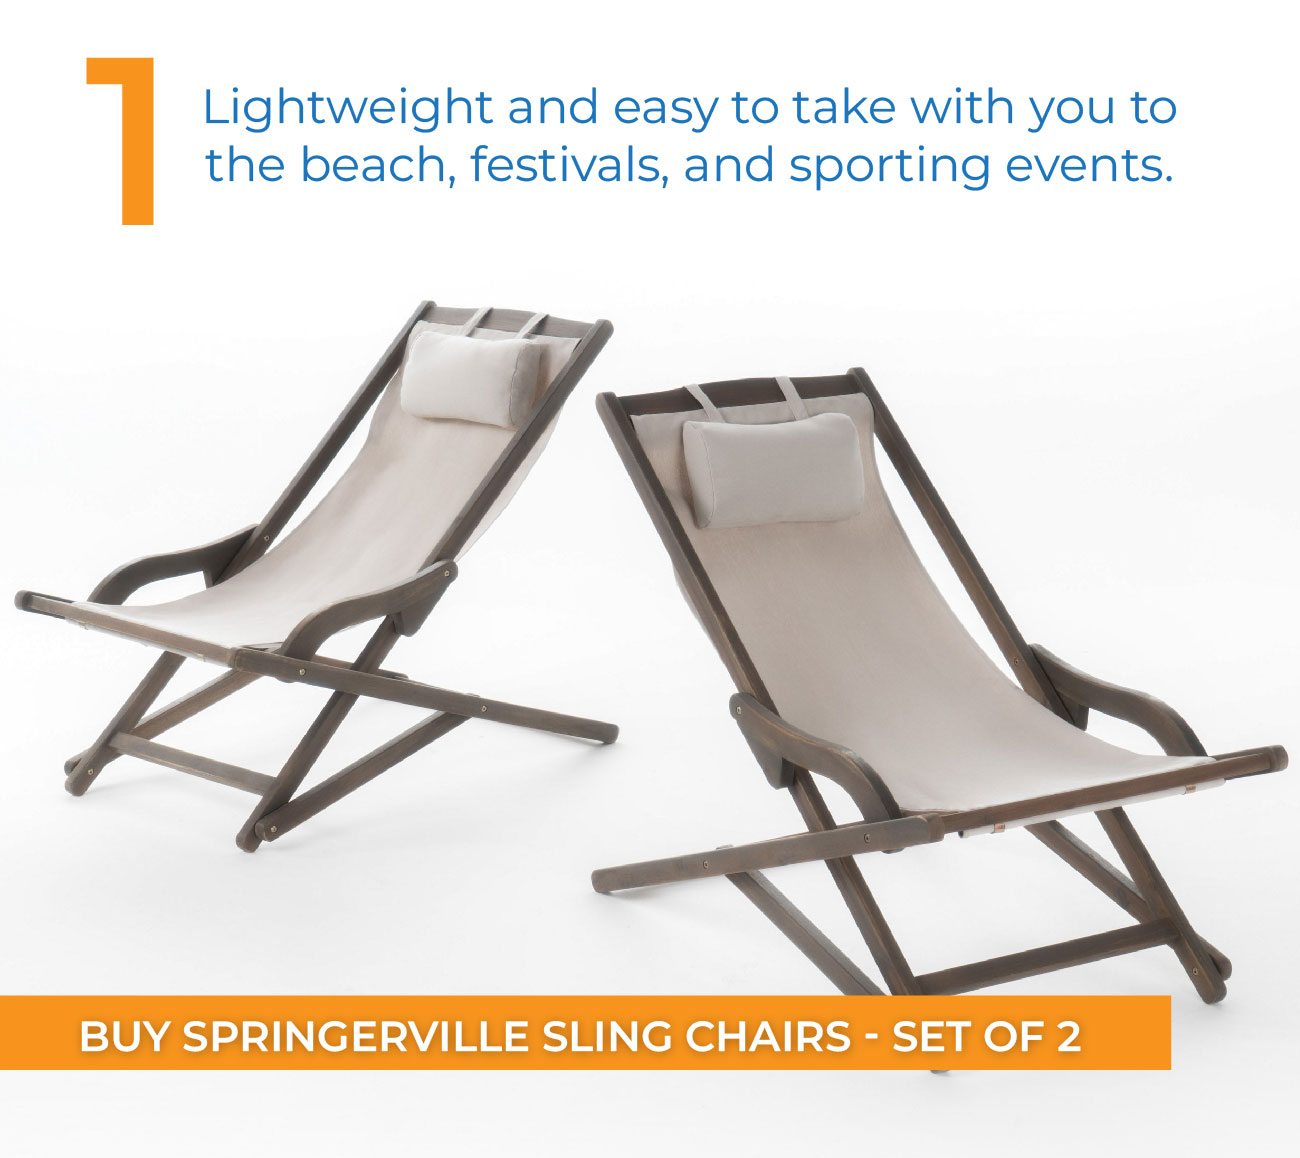 Set of 2 Springerville Sling Chairs